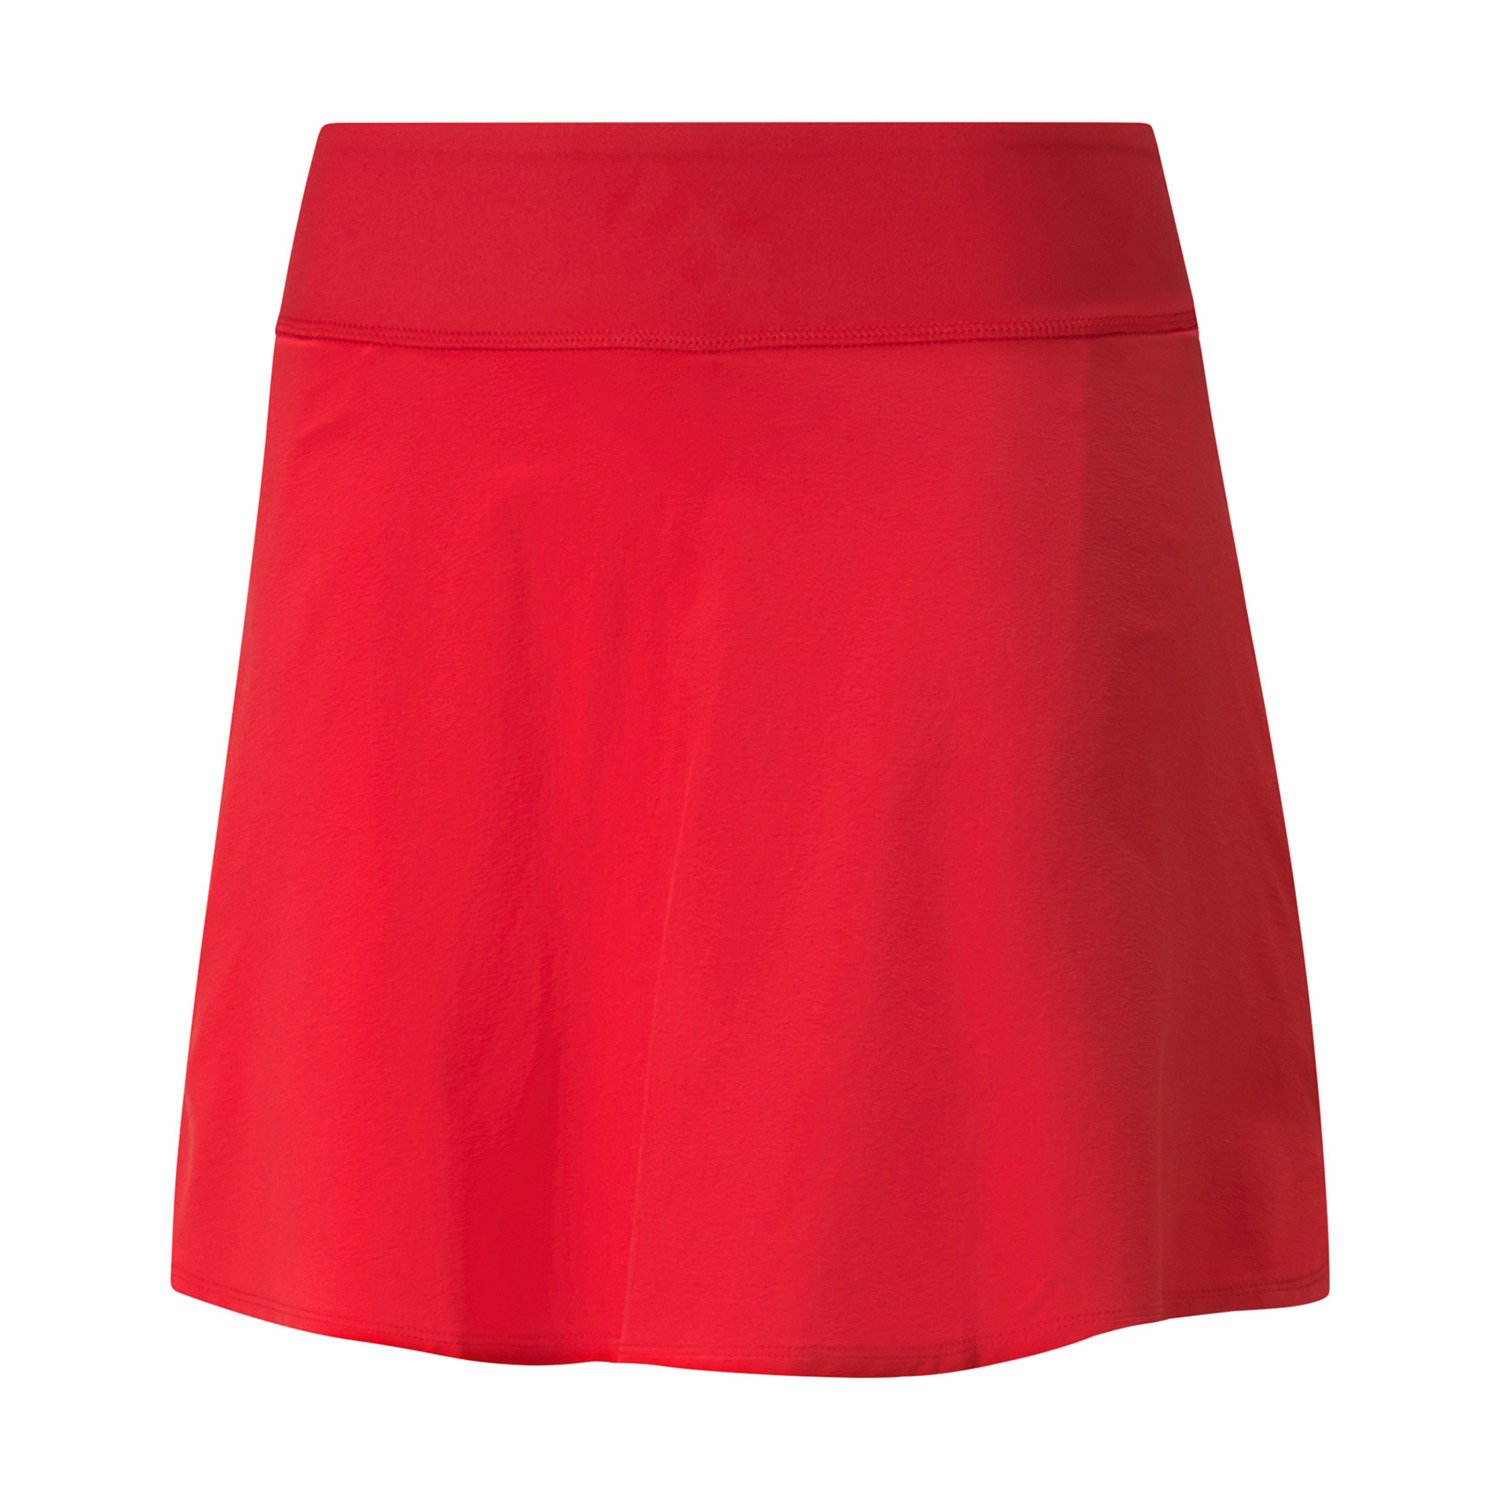 Pwrshape Solid Skirt